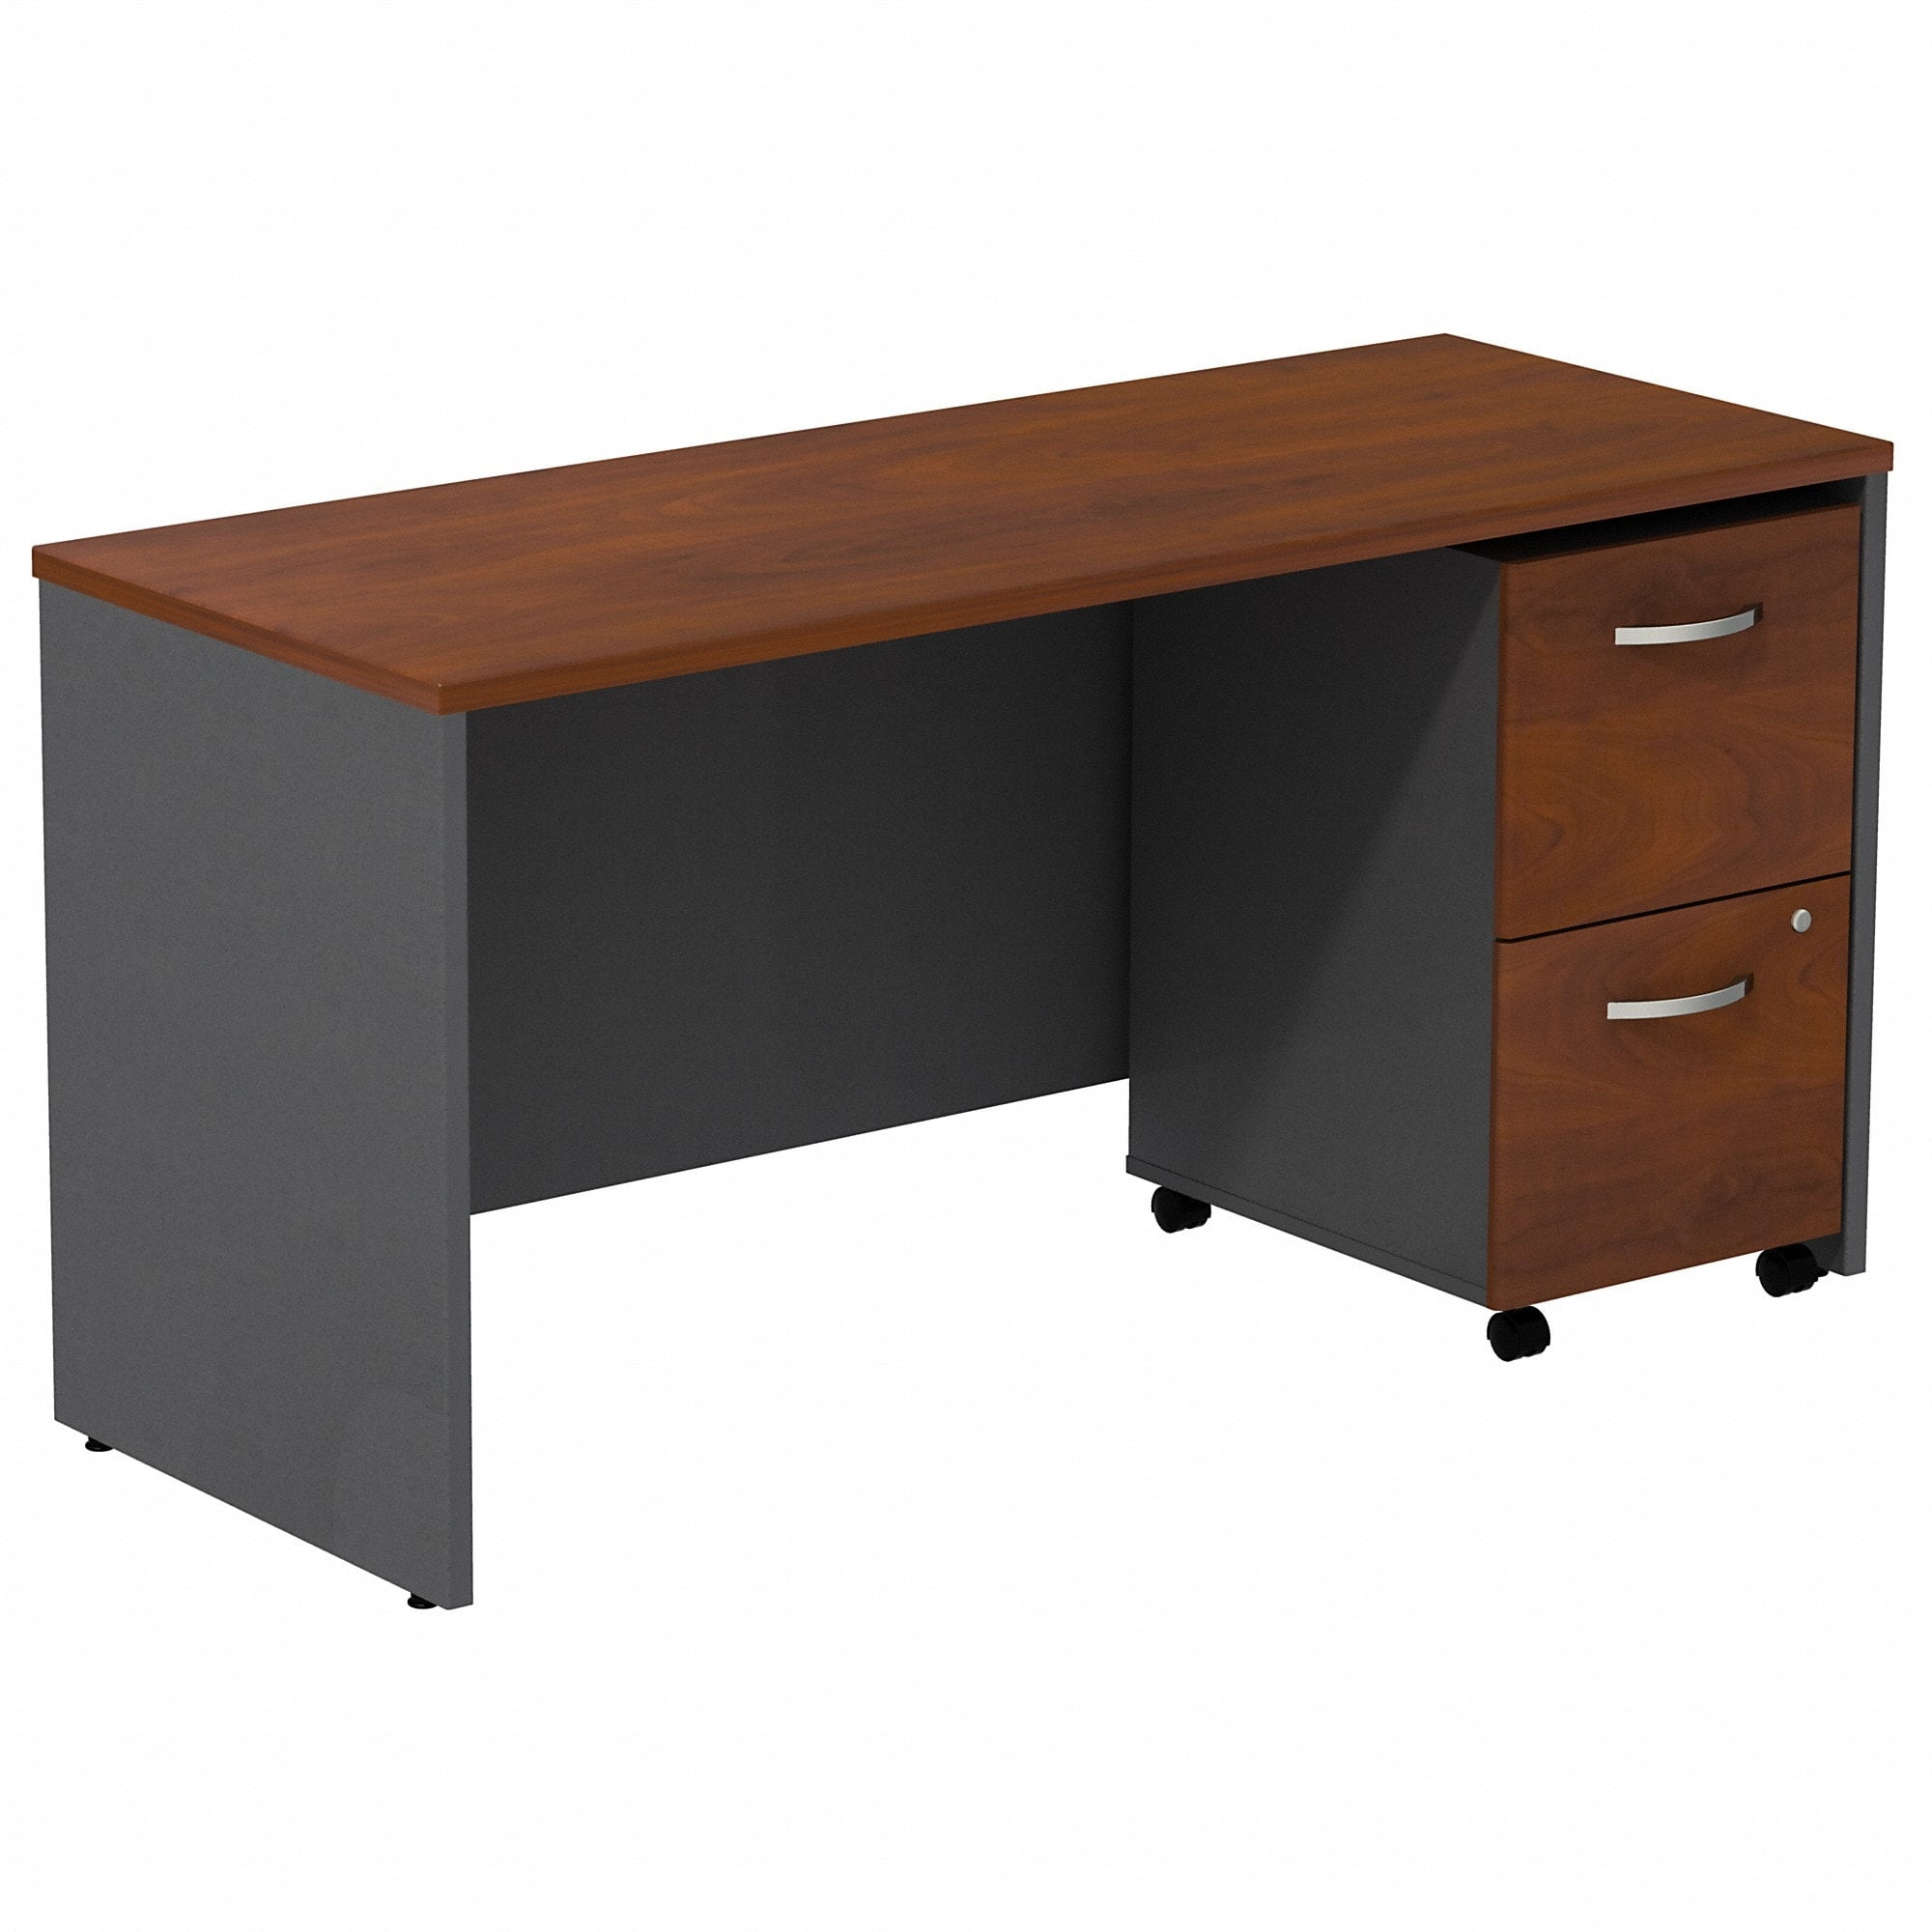 Picture of Bush Business Furniture SRC029HCSU Series C Desk Credenza with 2 Drawer Mobile Pedestal - Hansen Cherry